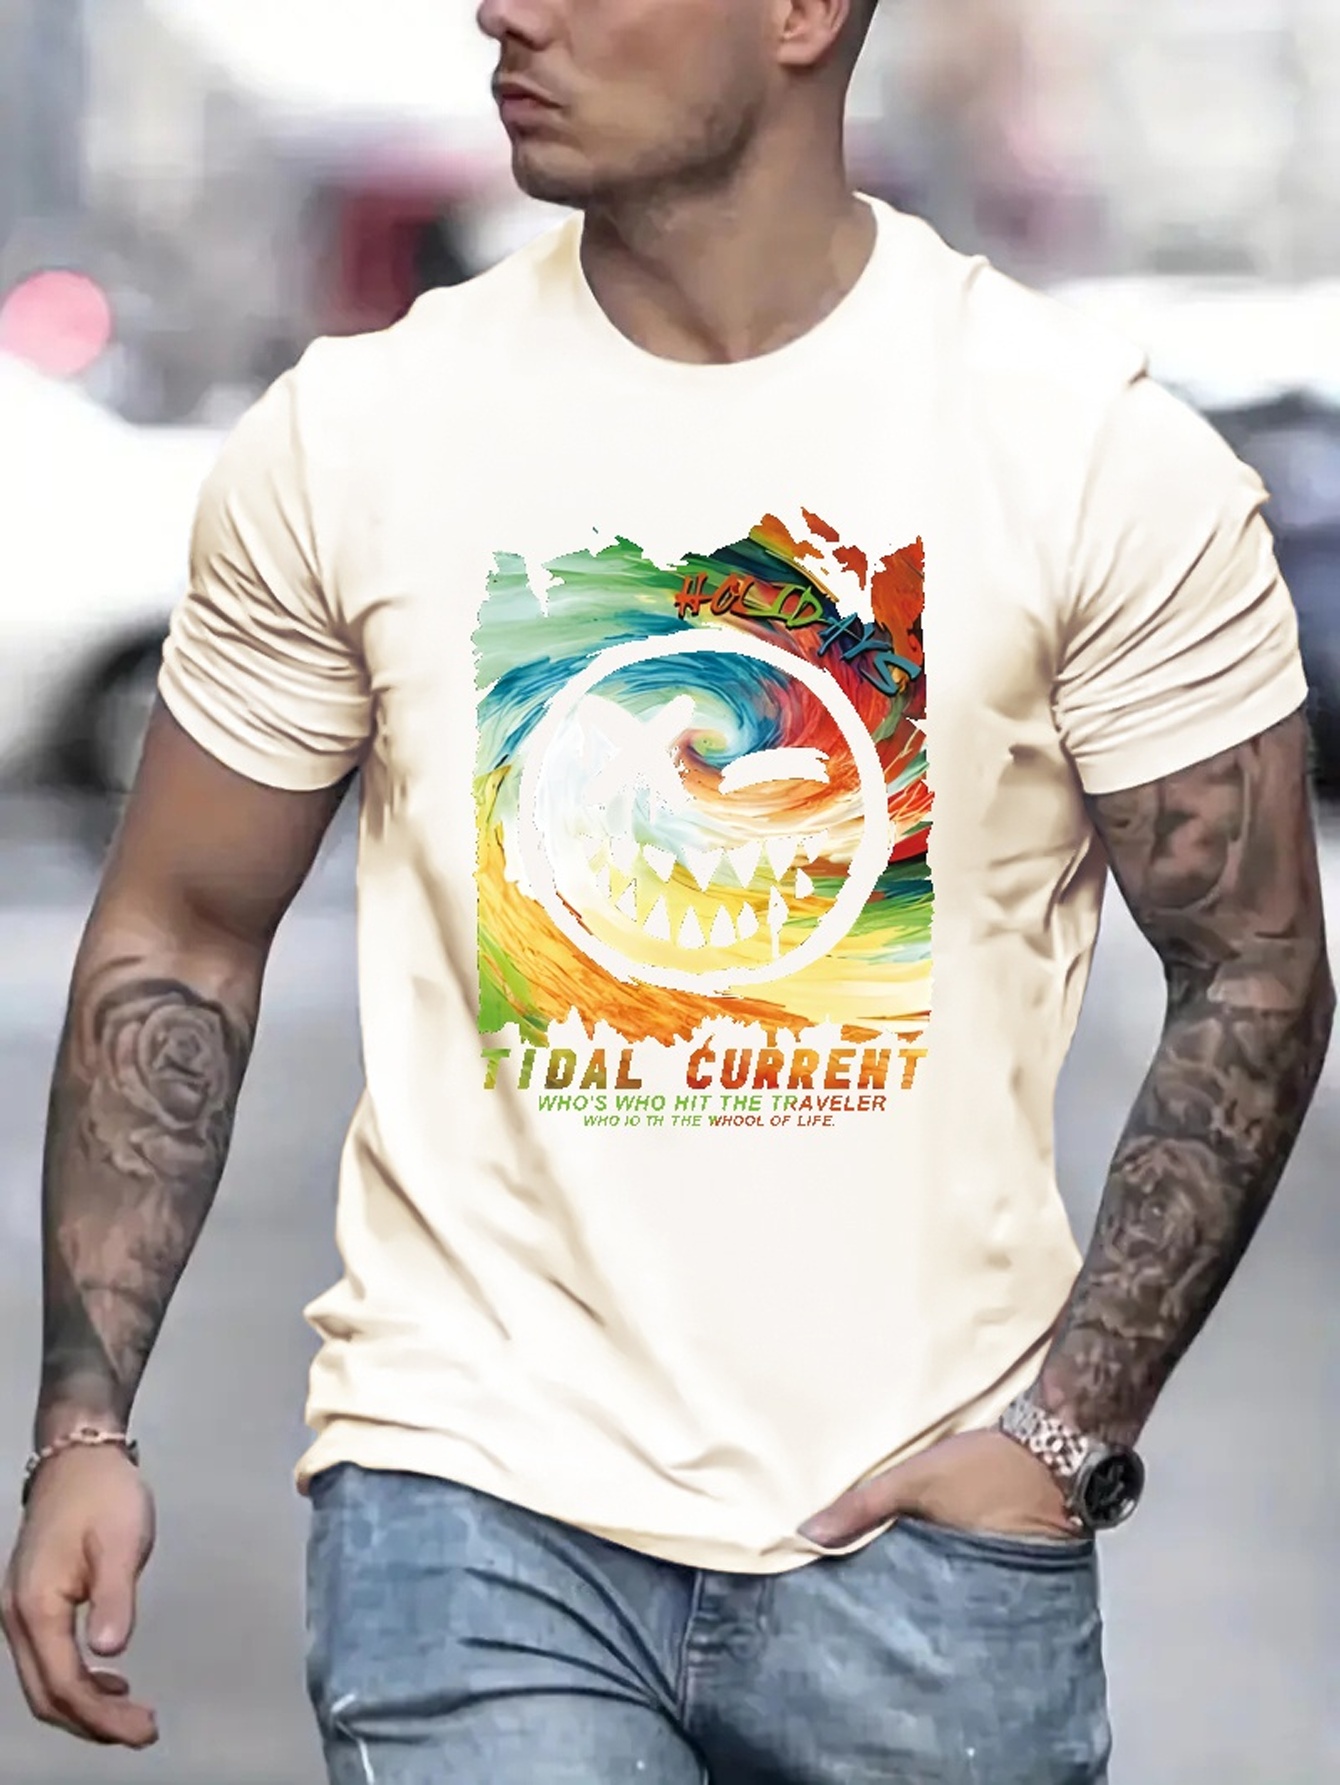 Swirl T-shirt Men Graphic Tshirts Cool Casual Tshirts Novelty